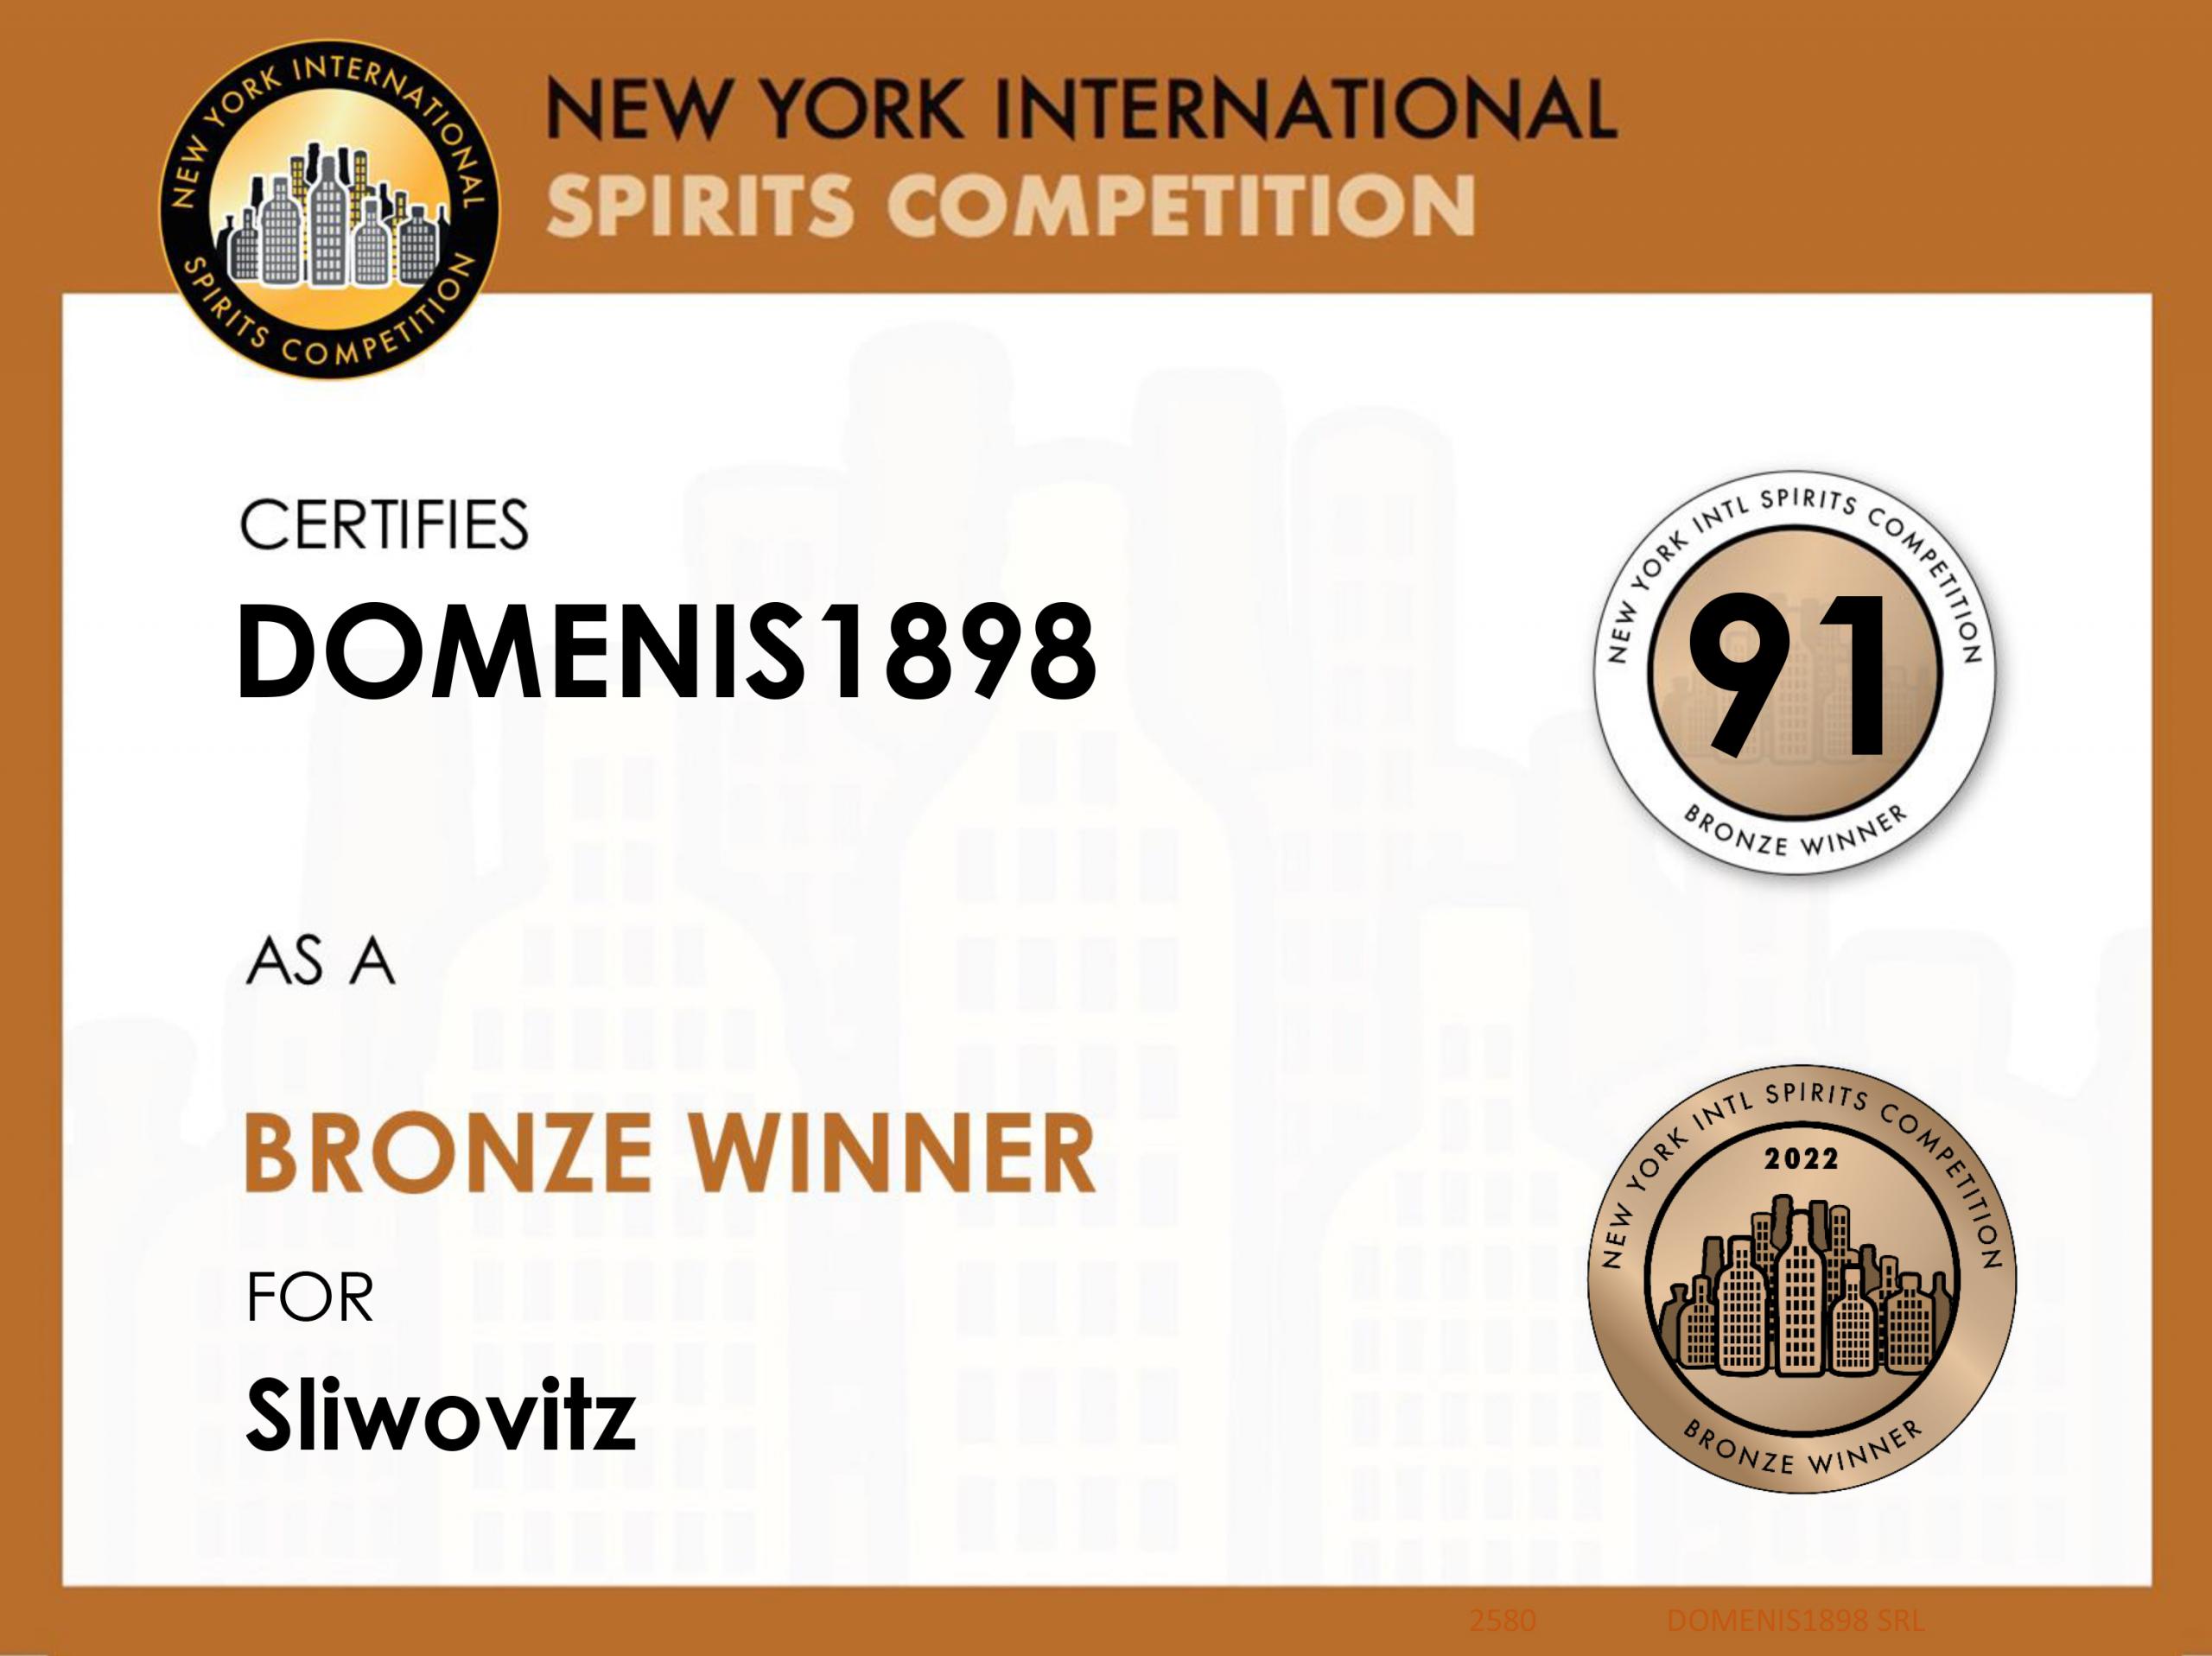 New York Intl Spirits Competition 2022 – Bronze Winner – Sliwovitz